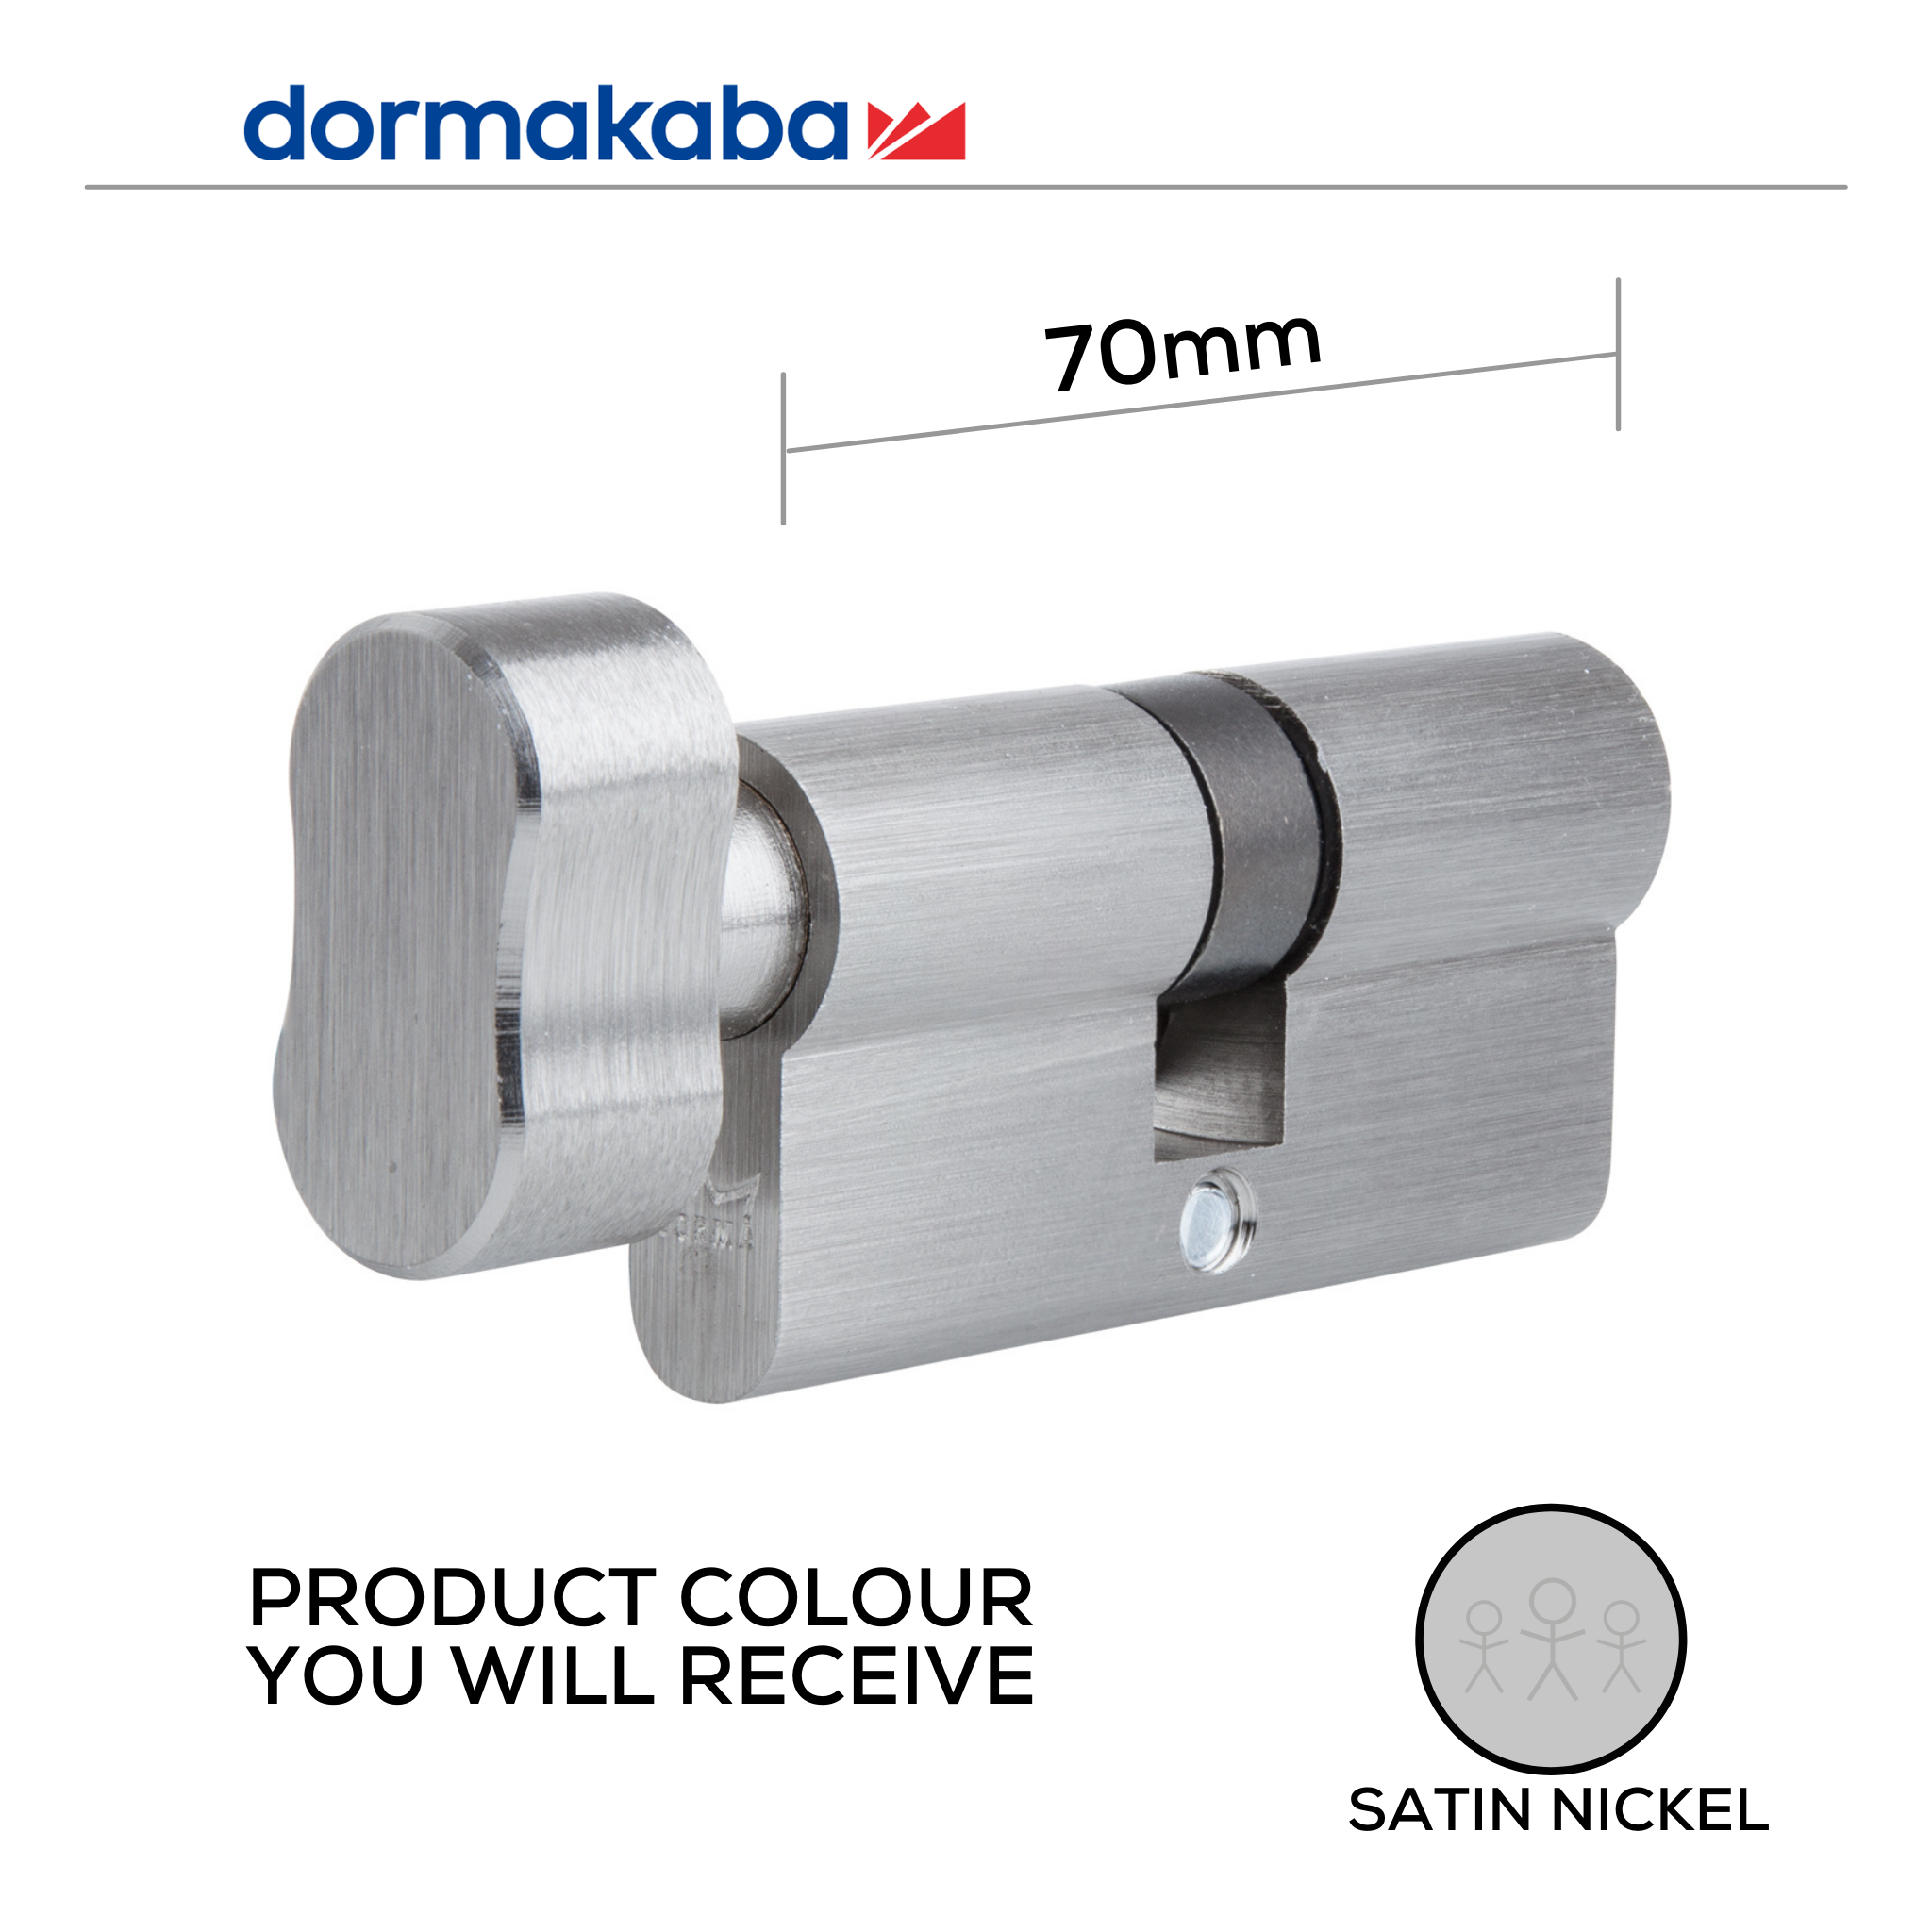 DKC057001 KD, 70mm - 35/35, Knob Cylinder, Thumbturn to Key, Keyed to Differ (Standard), 2 Keys, 5 Pin, Satin Nickel, DORMAKABA